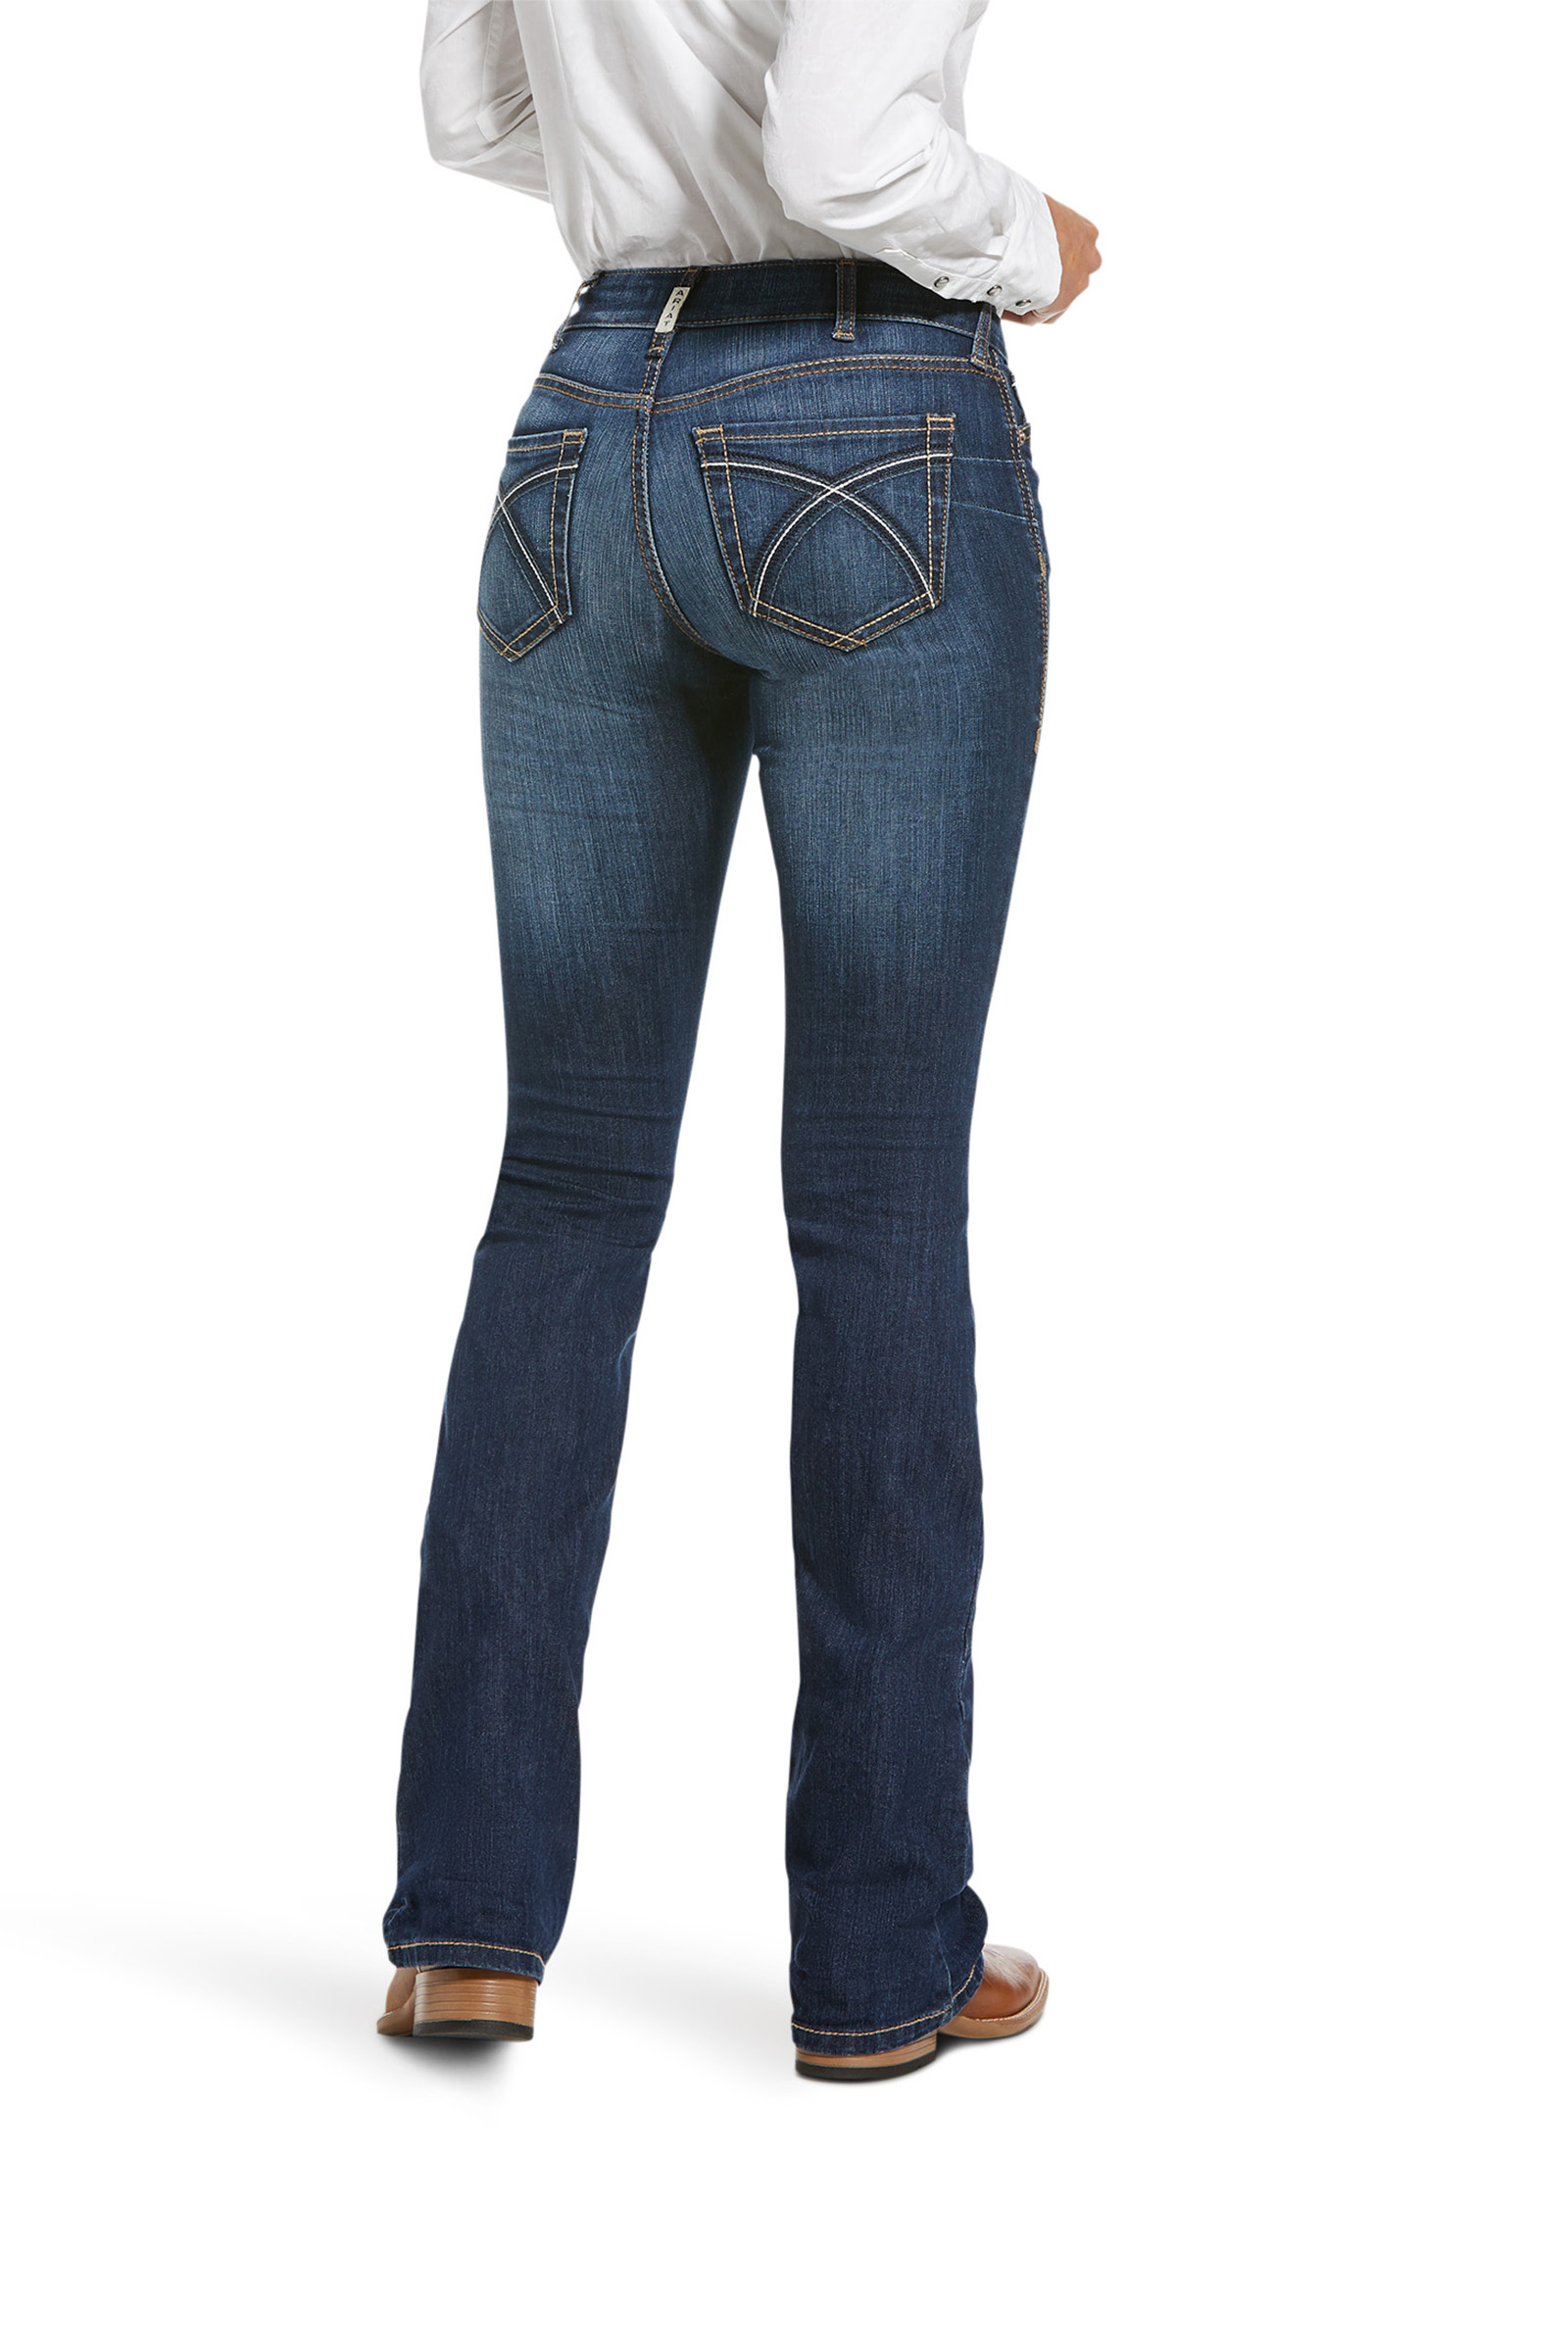 Buy Ariat Women's R.E.A.L Perfect Rise Stretch Rosa Boot Cut Jeans